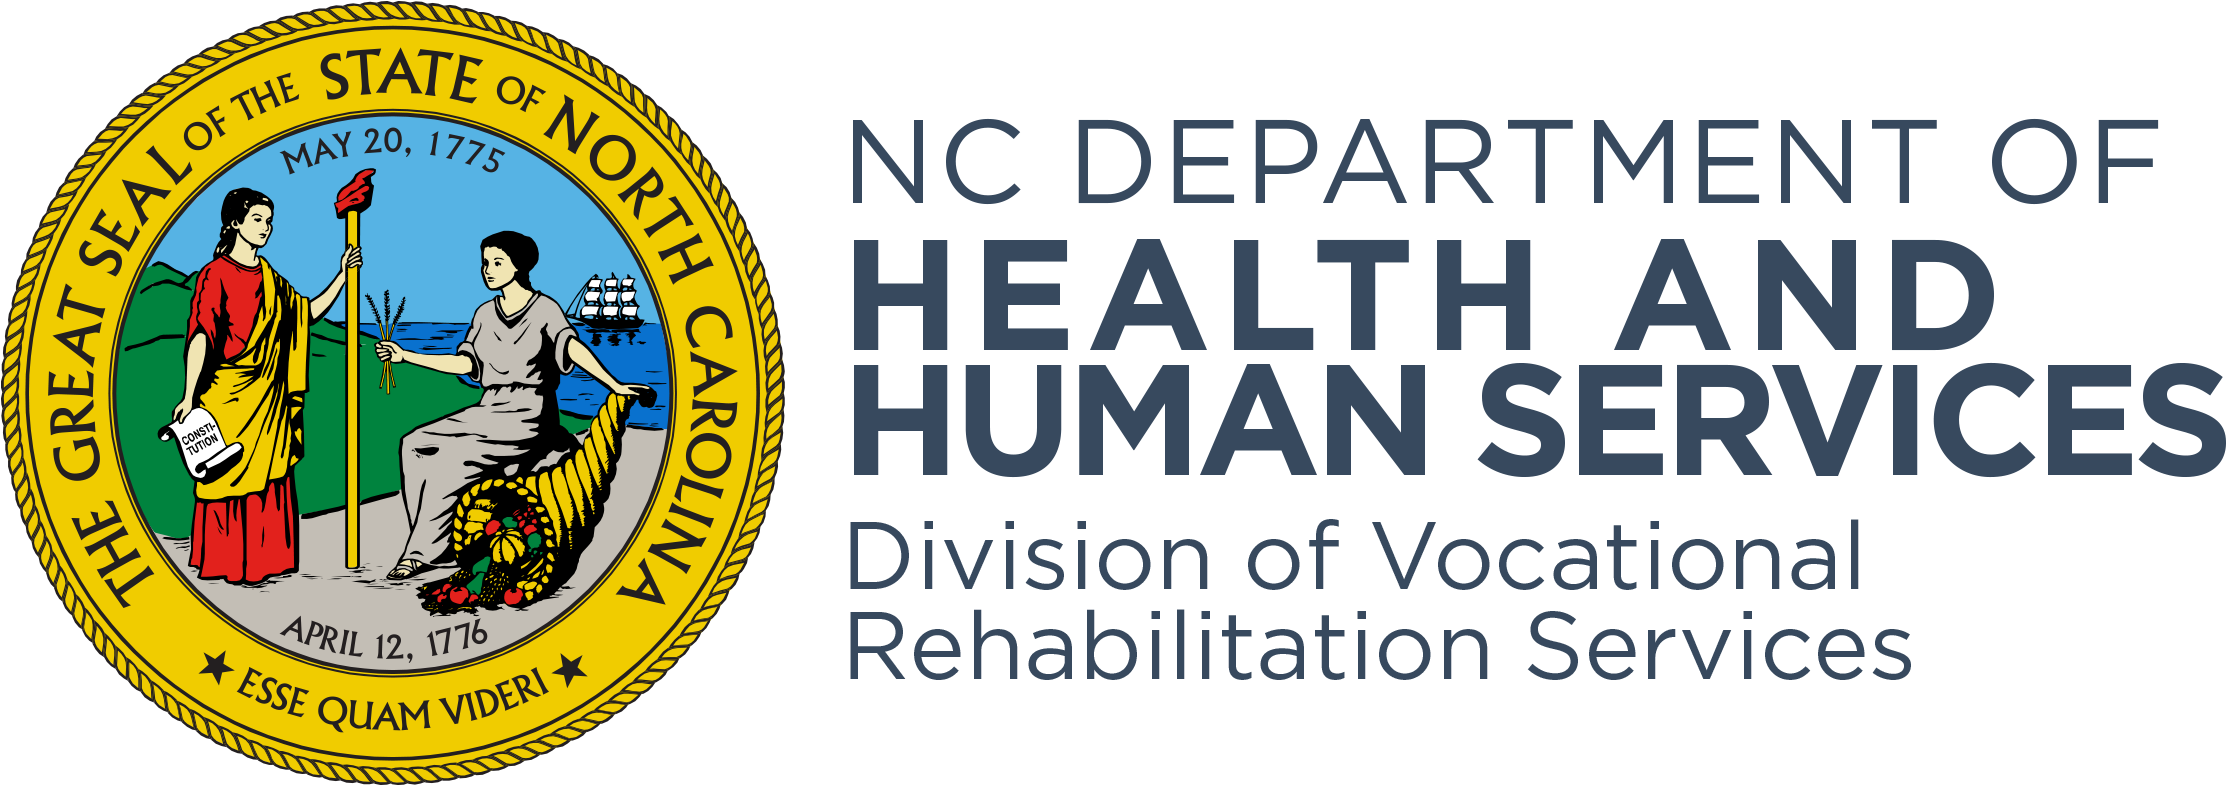 Ncdhhs Seal Vrs Hor Rgb - North Carolina State Seal (2350x784)